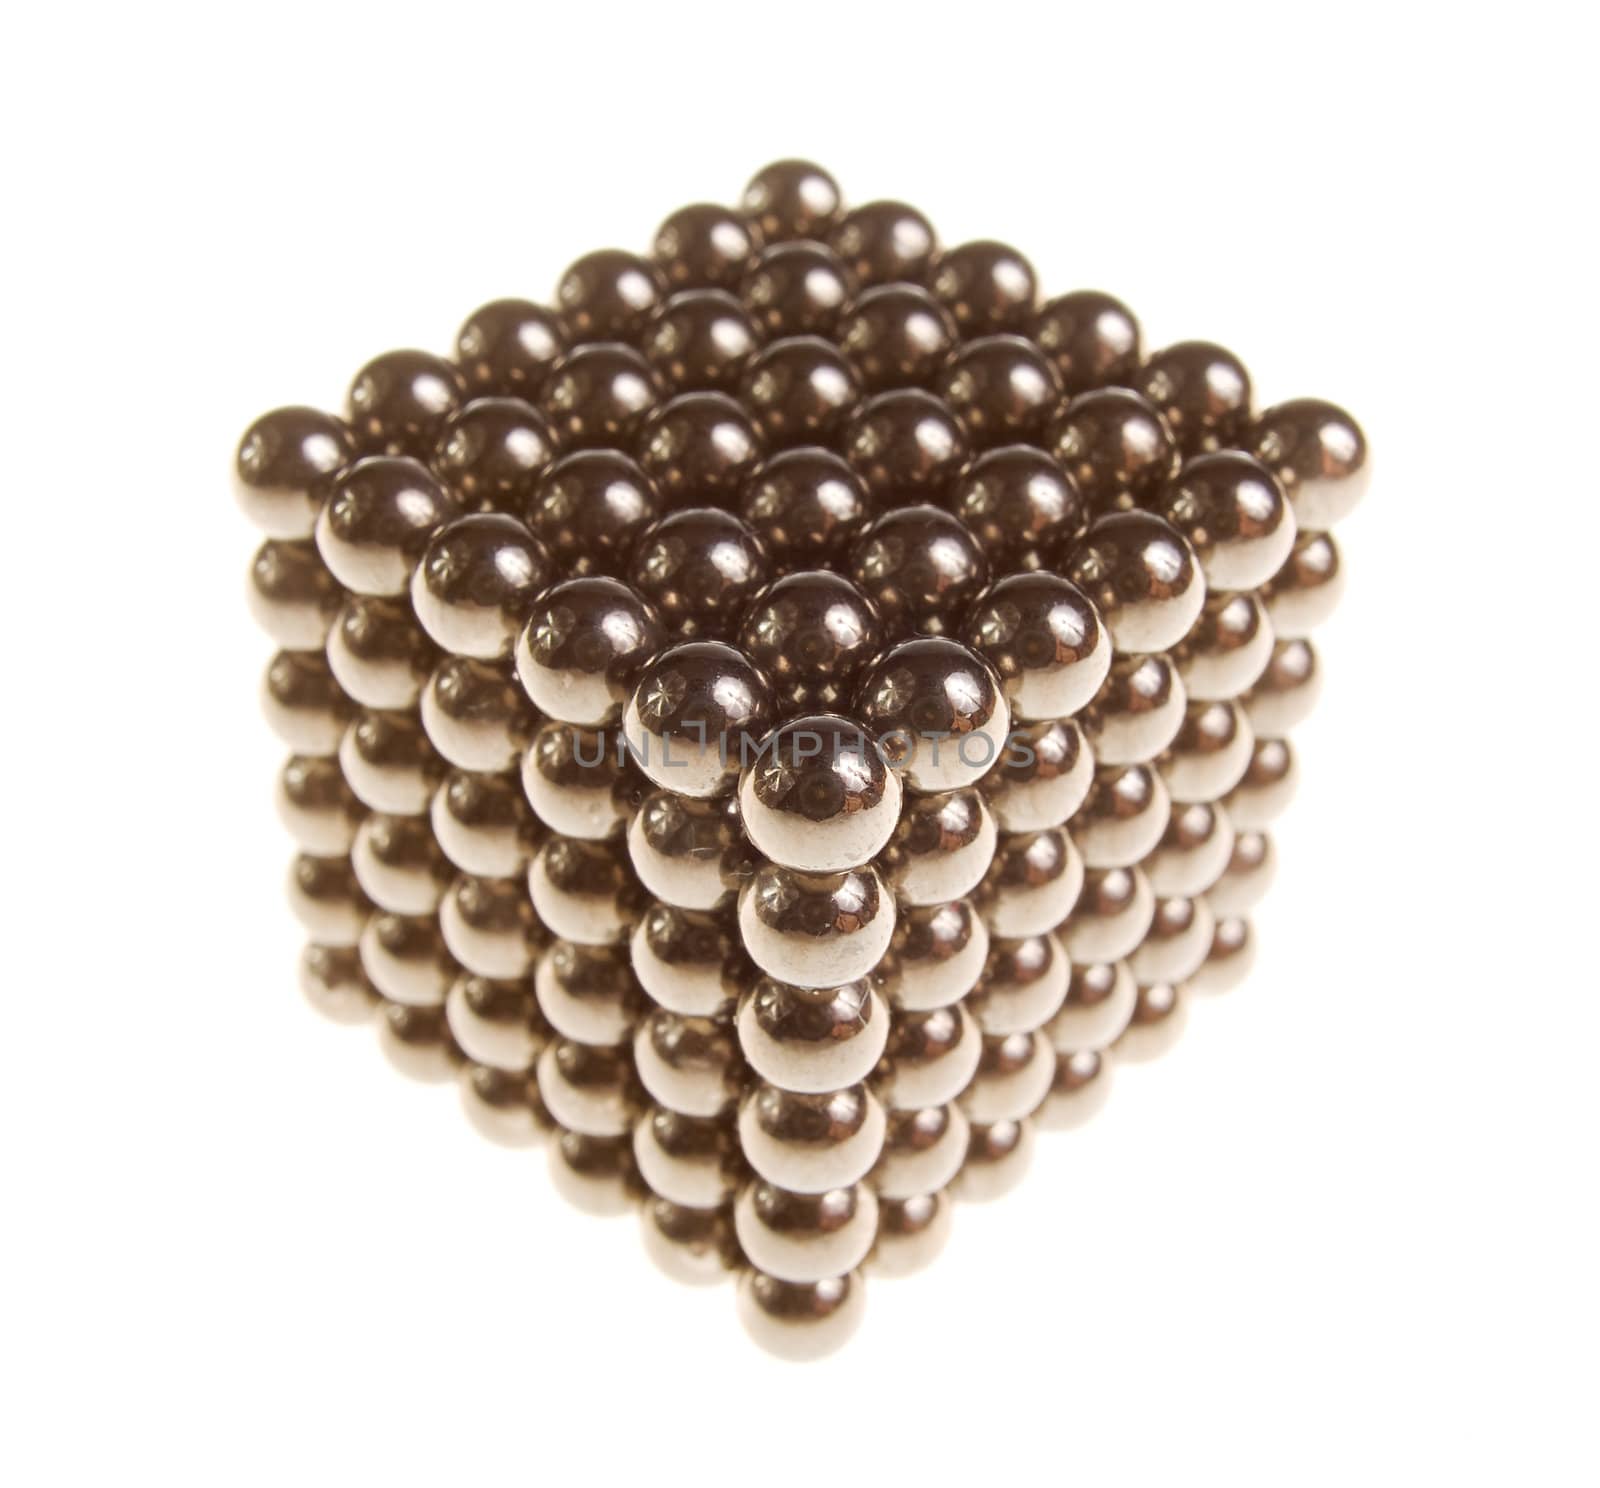 Cube of shiny metallic balls by BIG_TAU